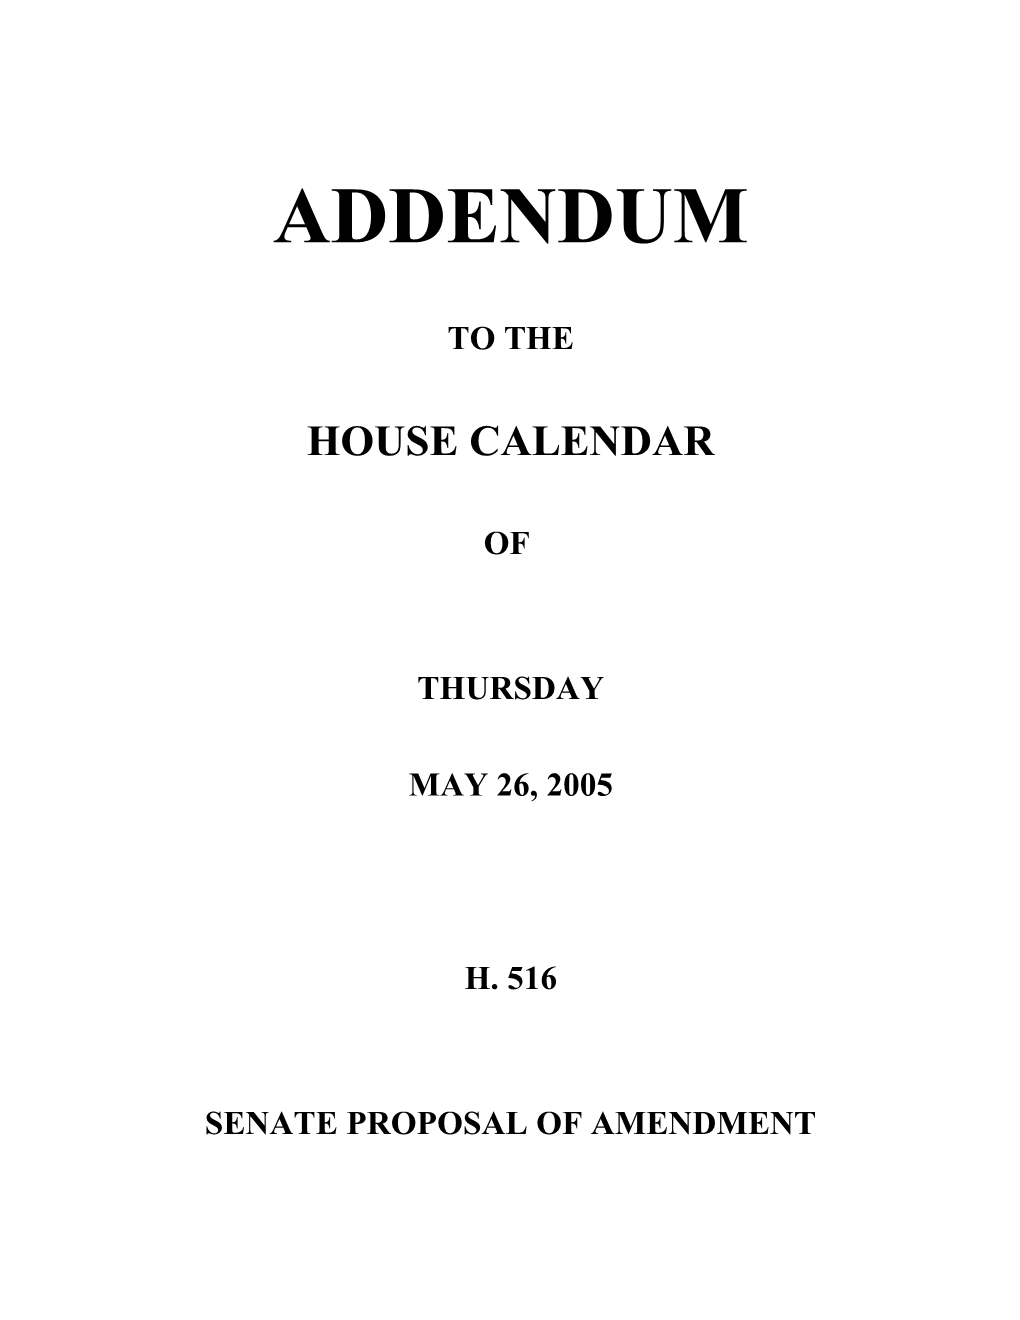 Senate Proposal of Amendment